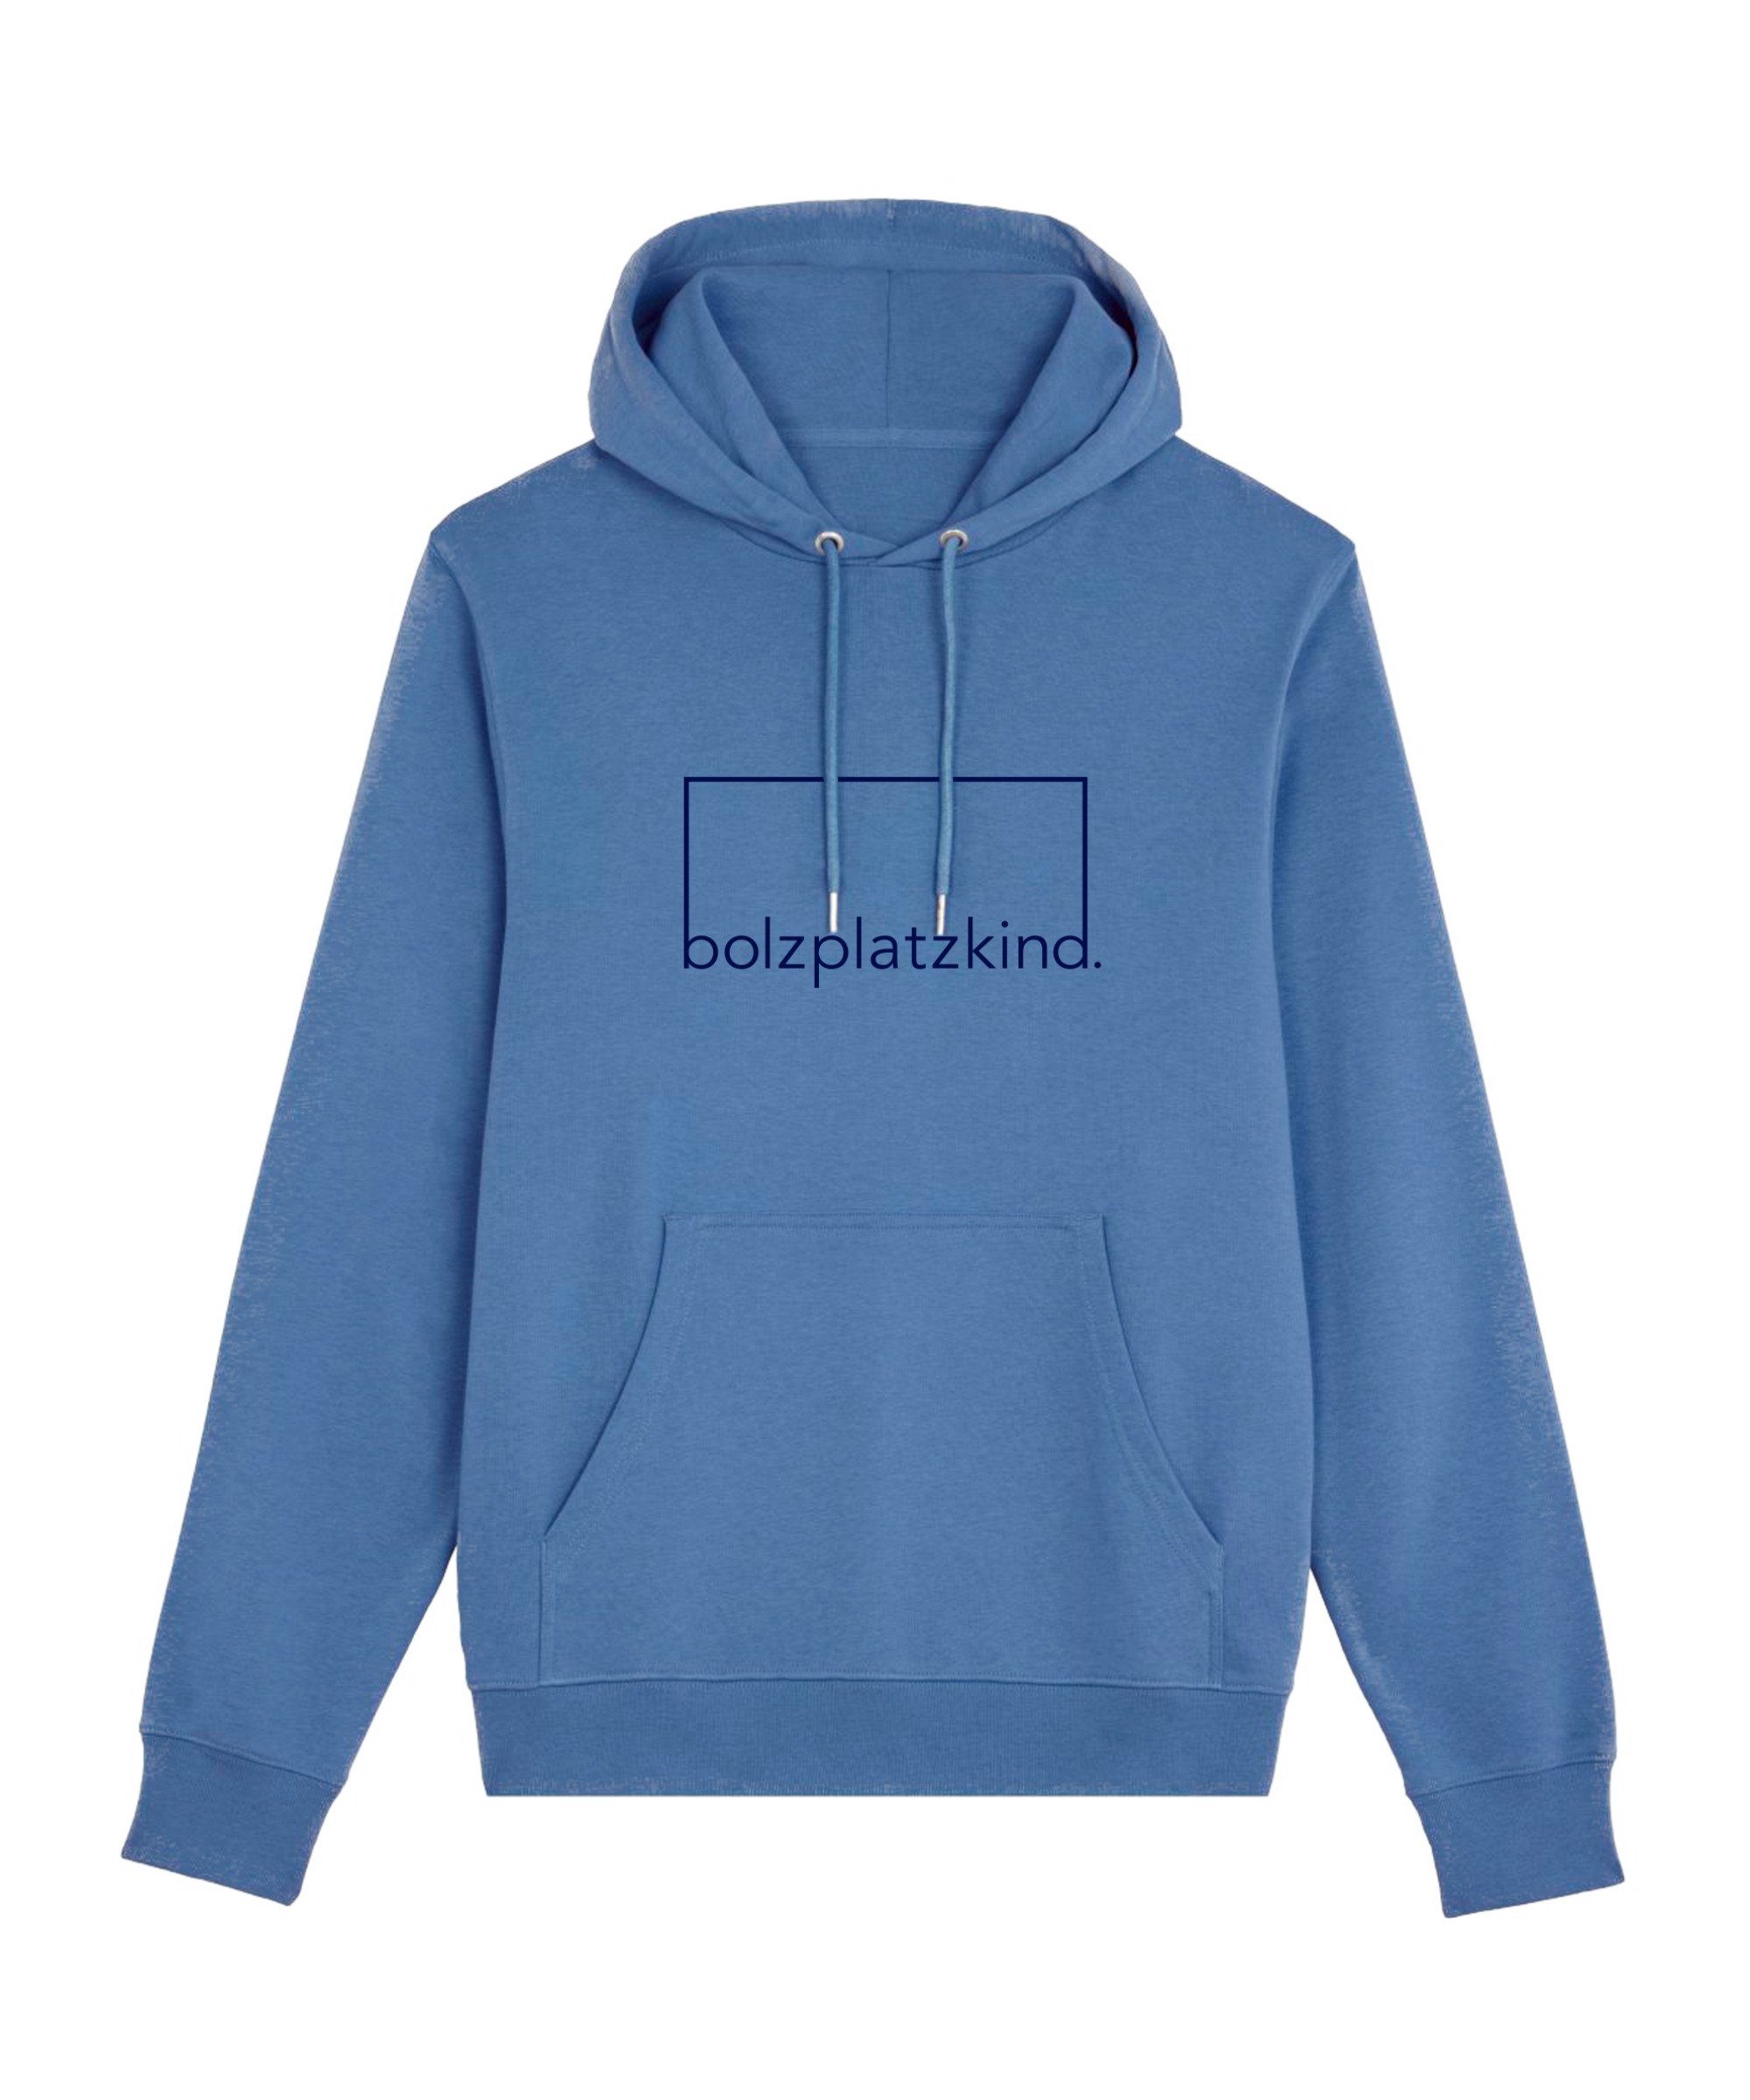 Bolzplatzkind Hoody Sweatshirt "Selbstliebe" blau